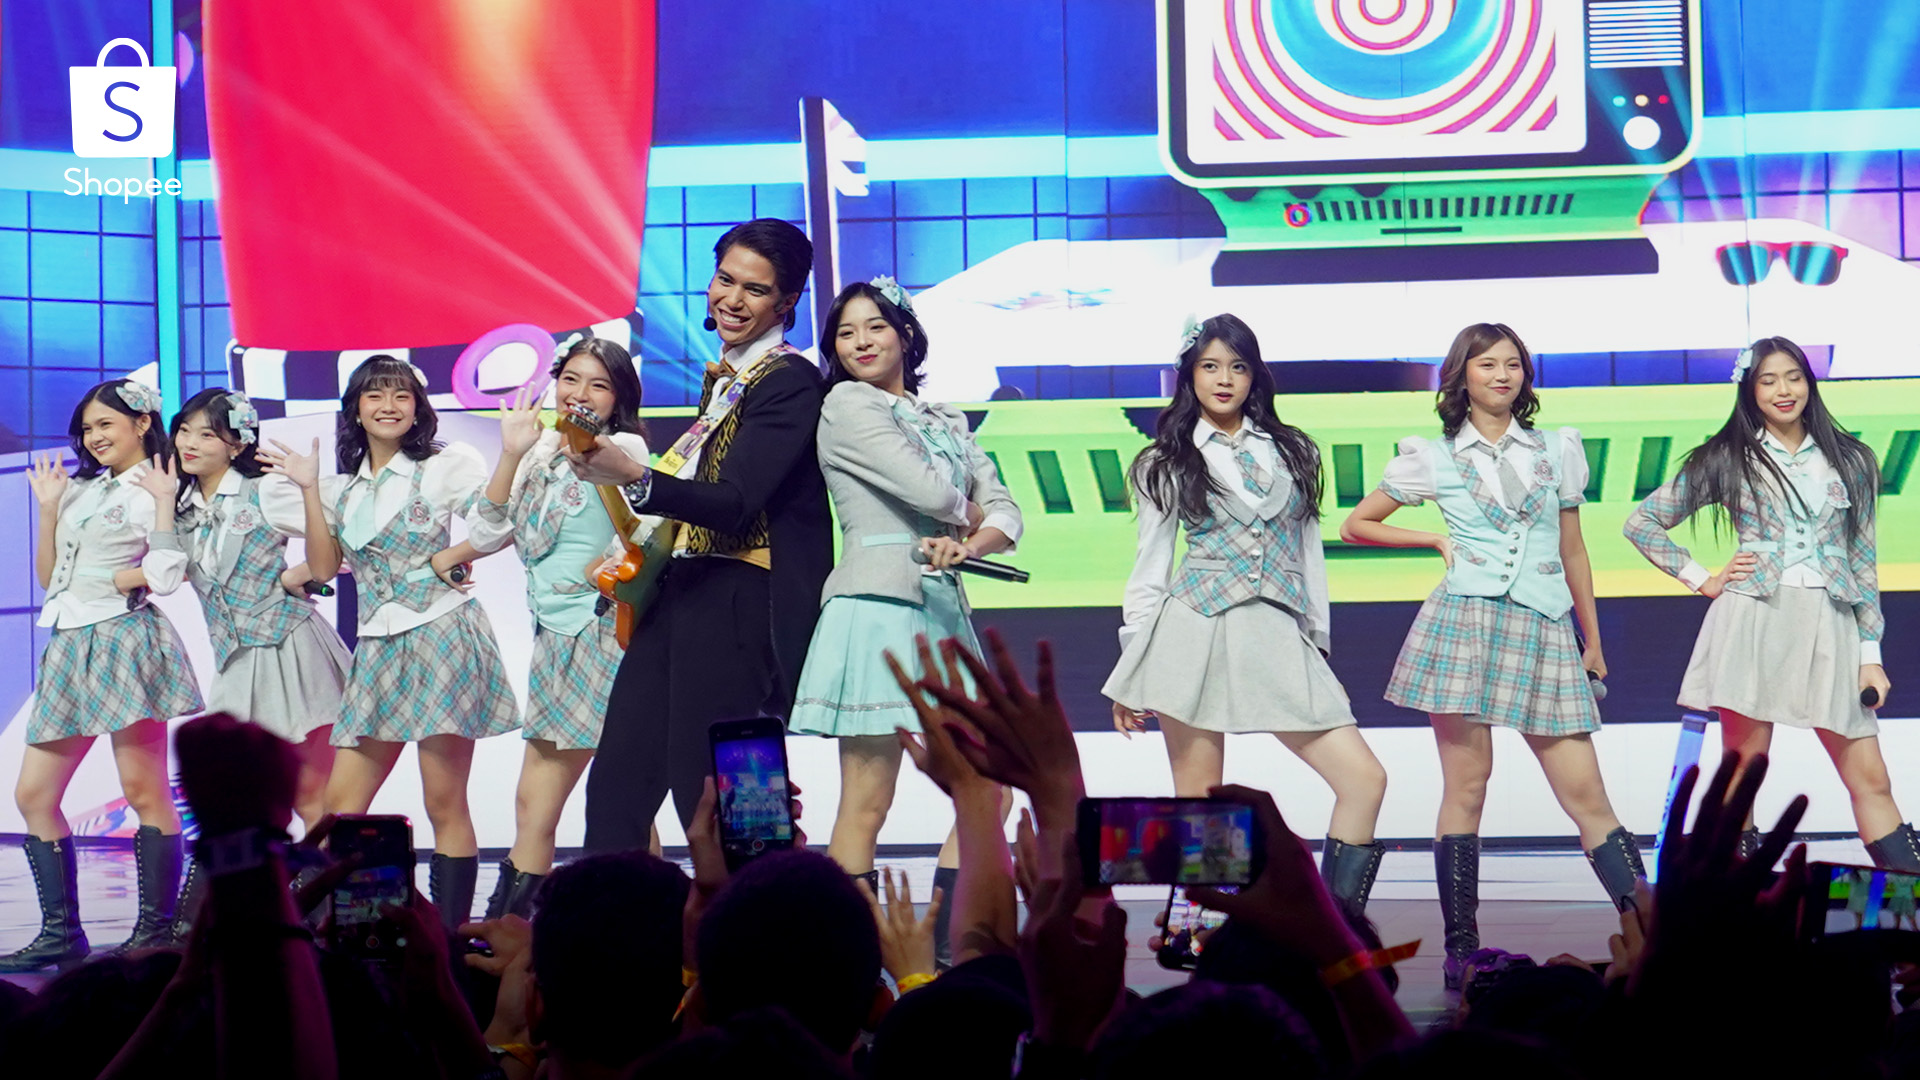 JKT48 Hingga Happy Asmara Meriahkan TV Show Shopee 11.11 Big Sale 